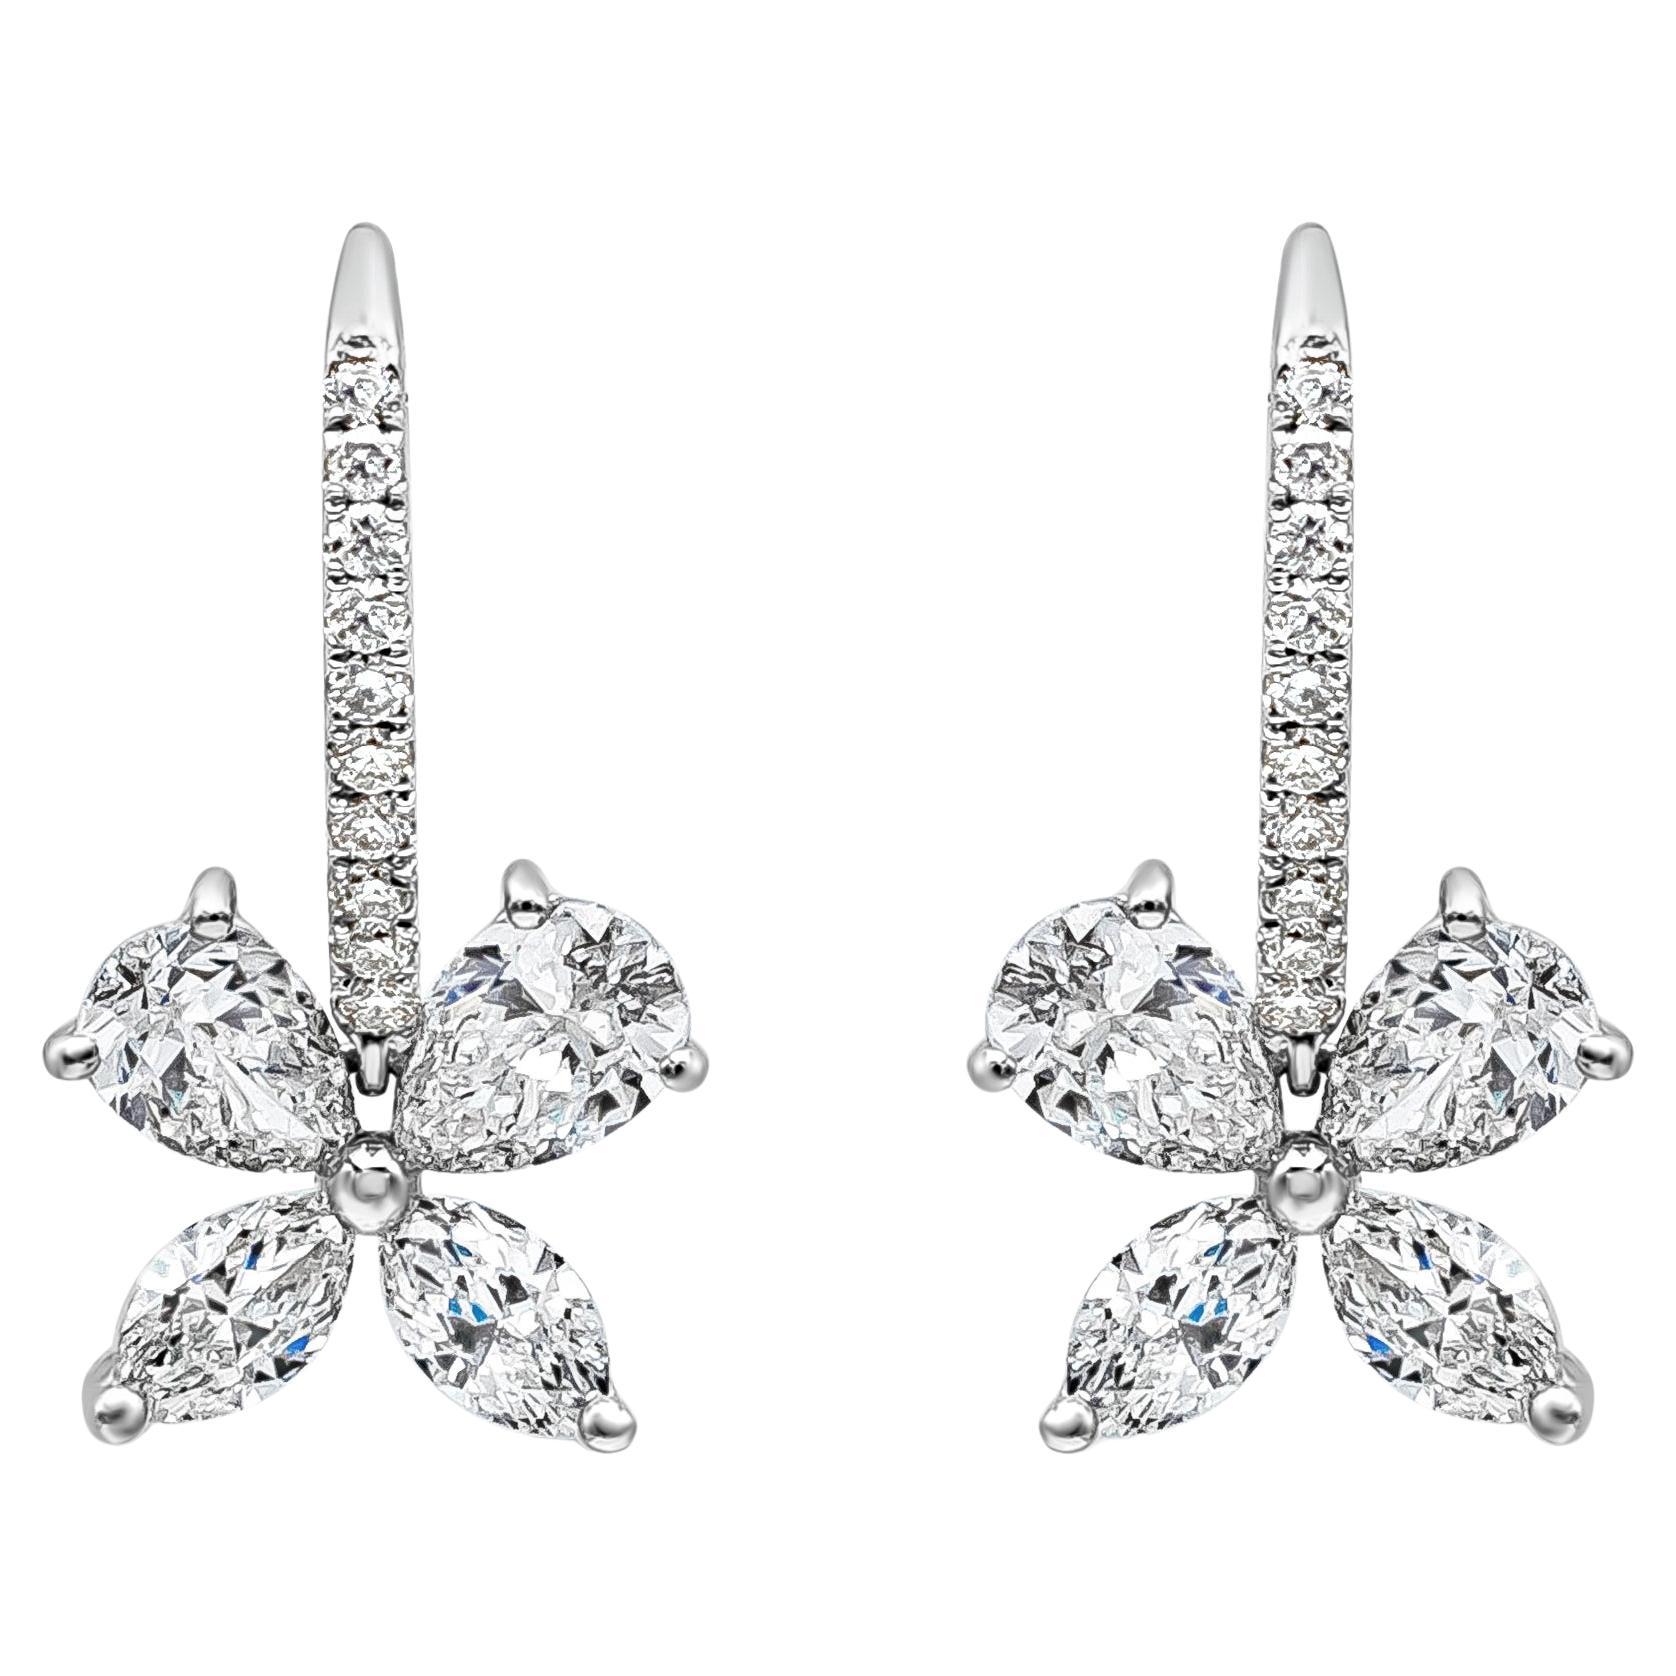 Roman Malakov 2.06 Carats Total Mixed-Shape Diamonds Drop Fashion Earrings